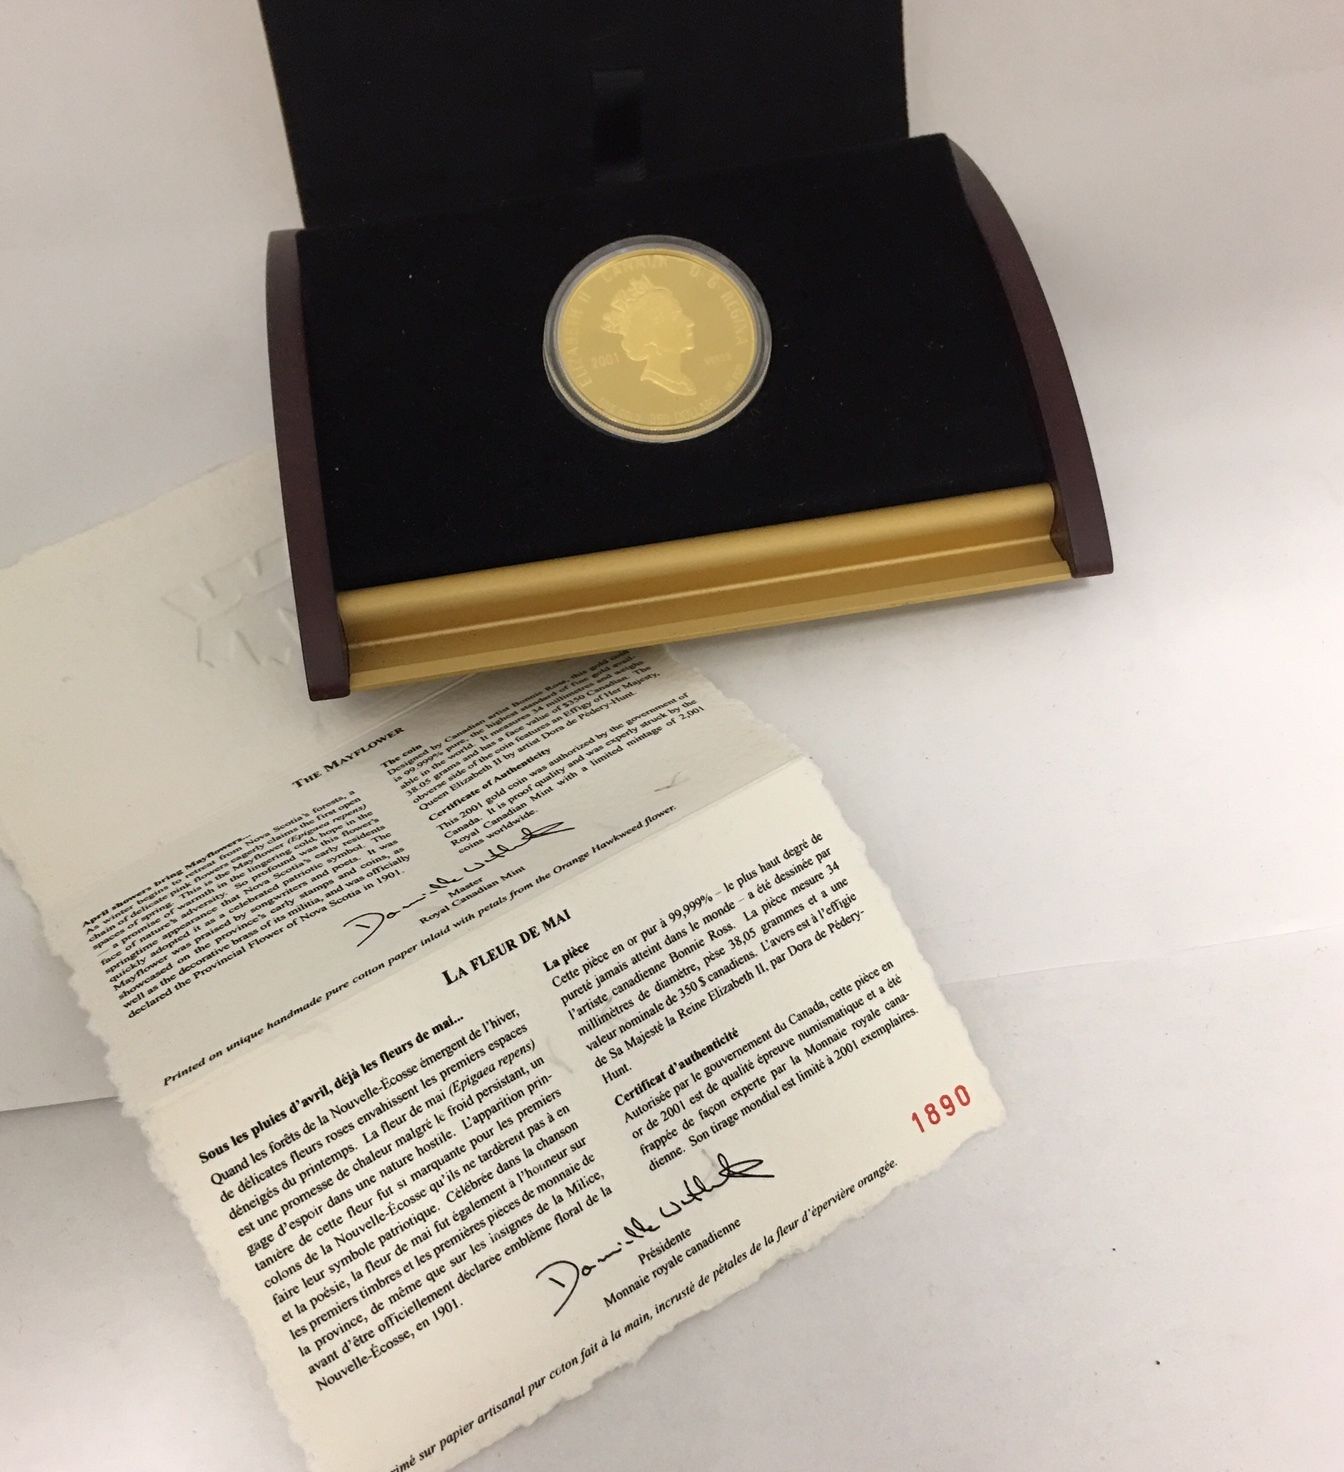 Elizabeth II 350 Dollar Pure Gold Coin Year 2001 .99999 "The Mayflower"